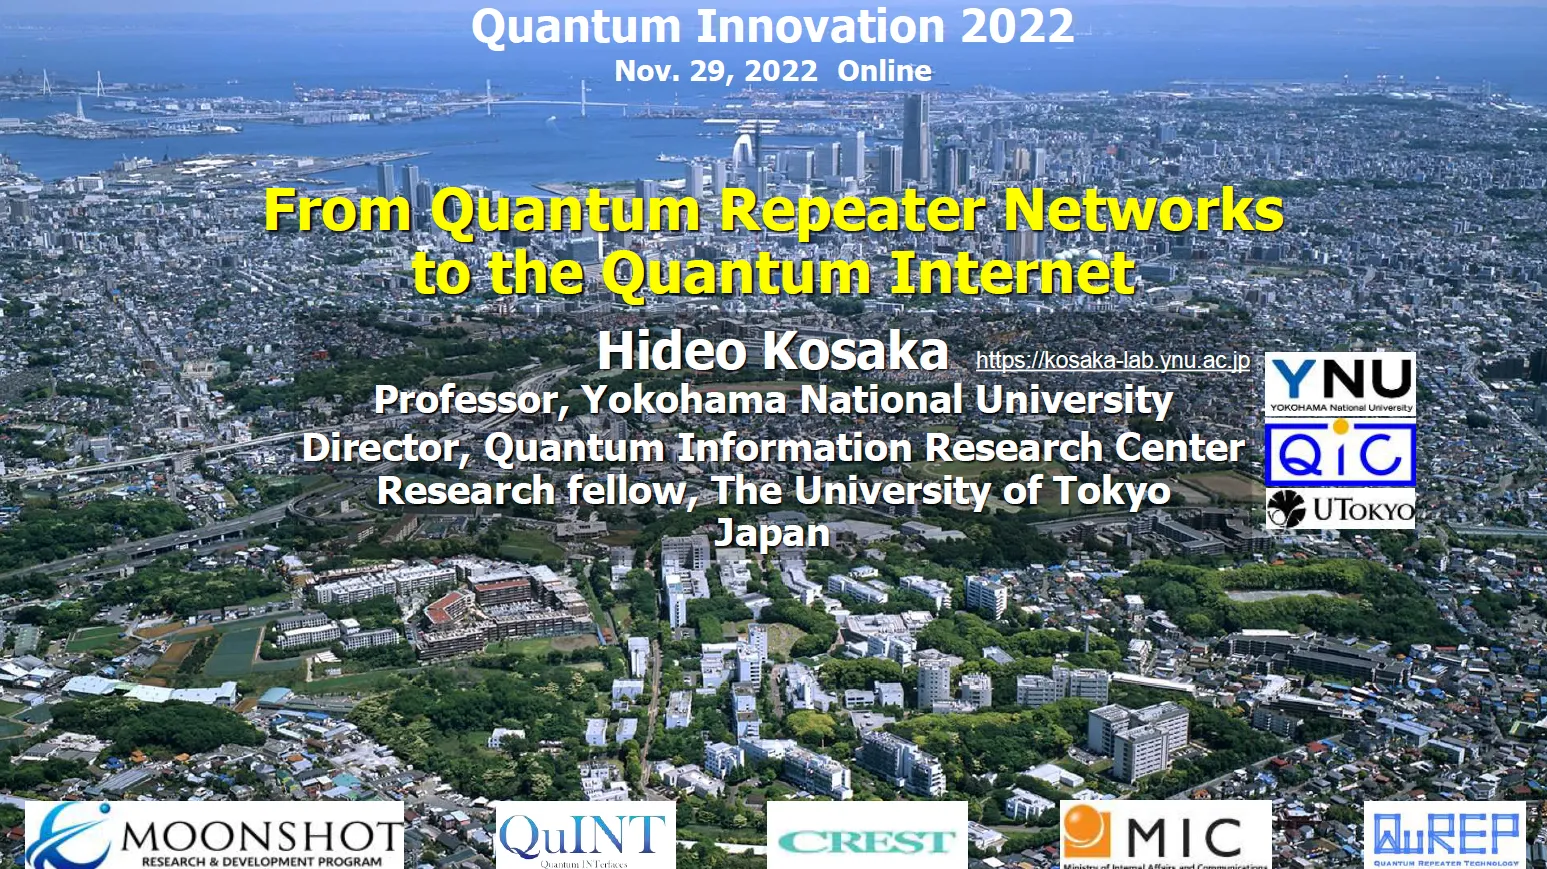 Quantum Innovation 2022 Presentation Materials